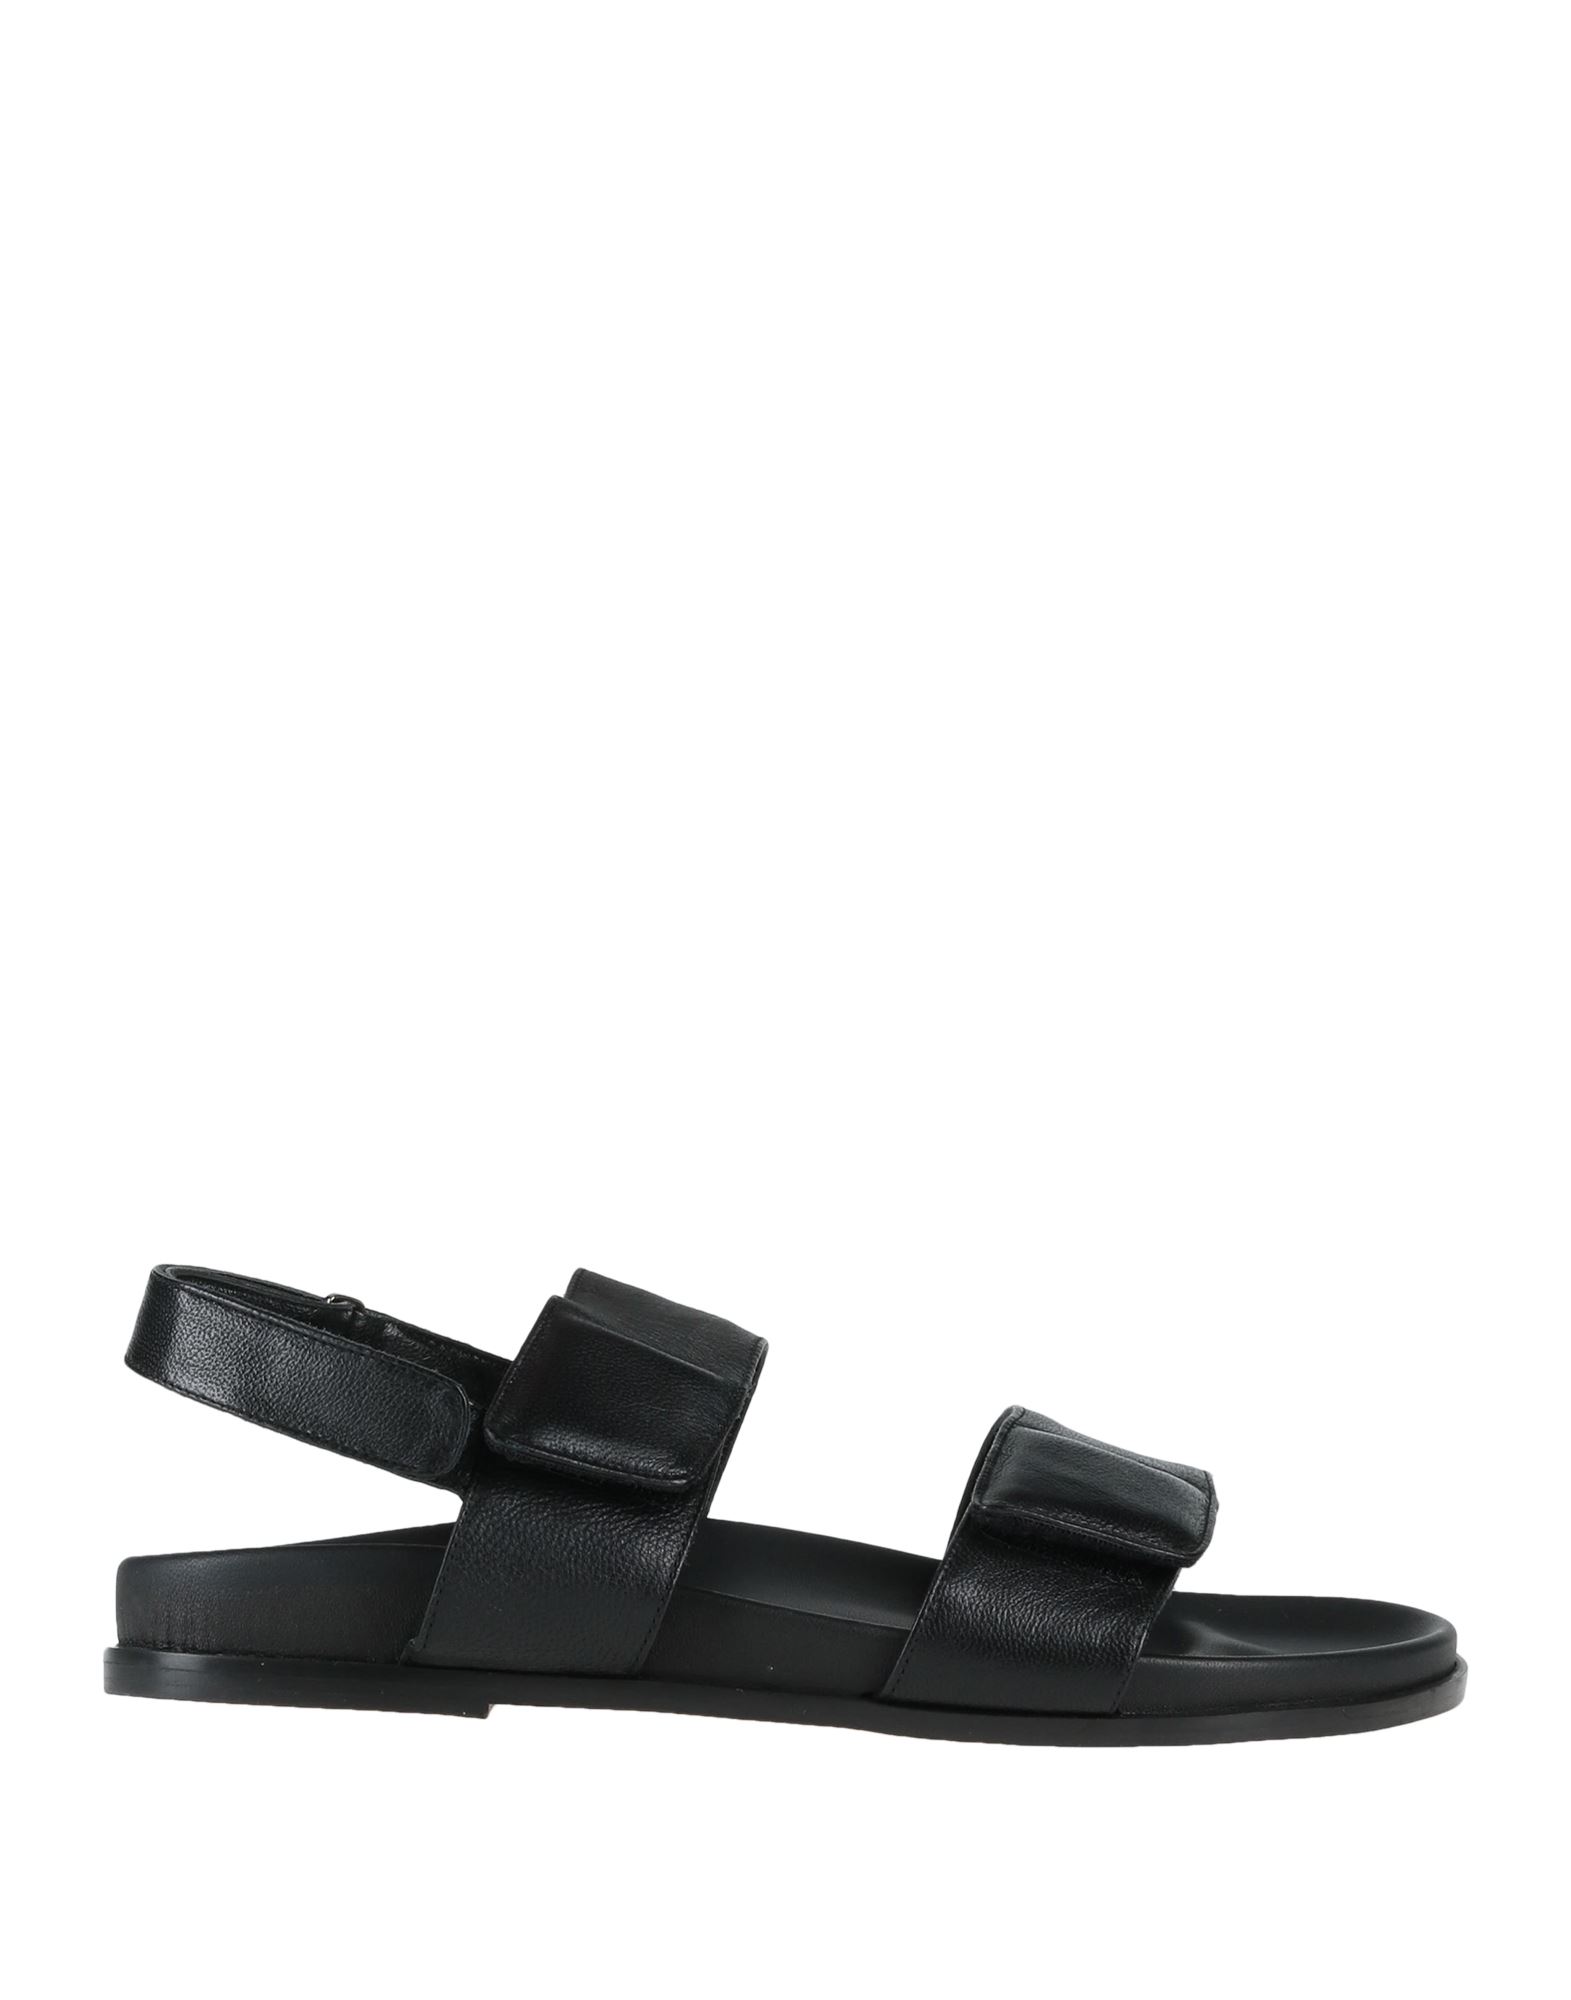 Daniele Ancarani Sandals In Black